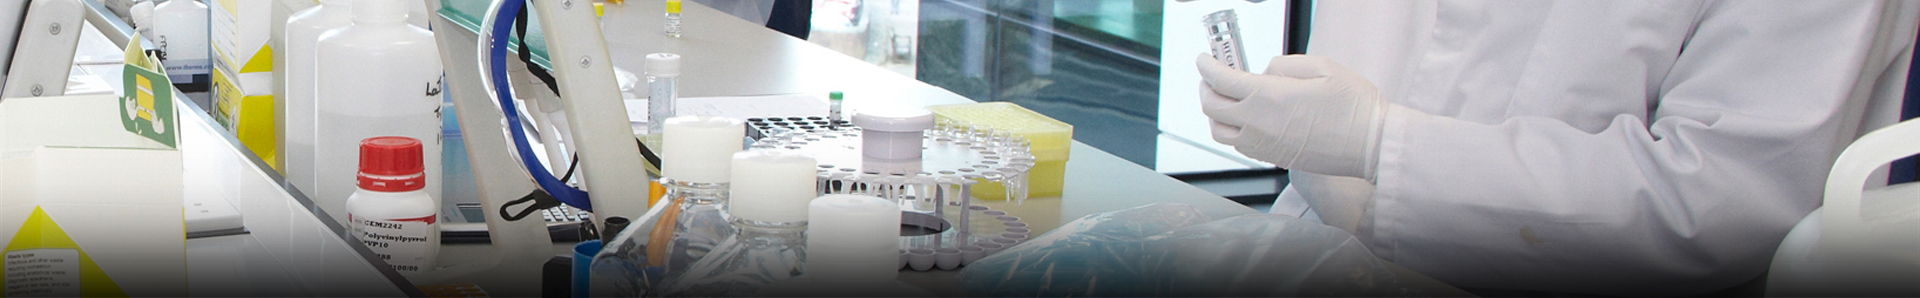 Laboratories & sample handling|Laboratory Sample Handling|Laboratory Equipments|Laboratory Instruments